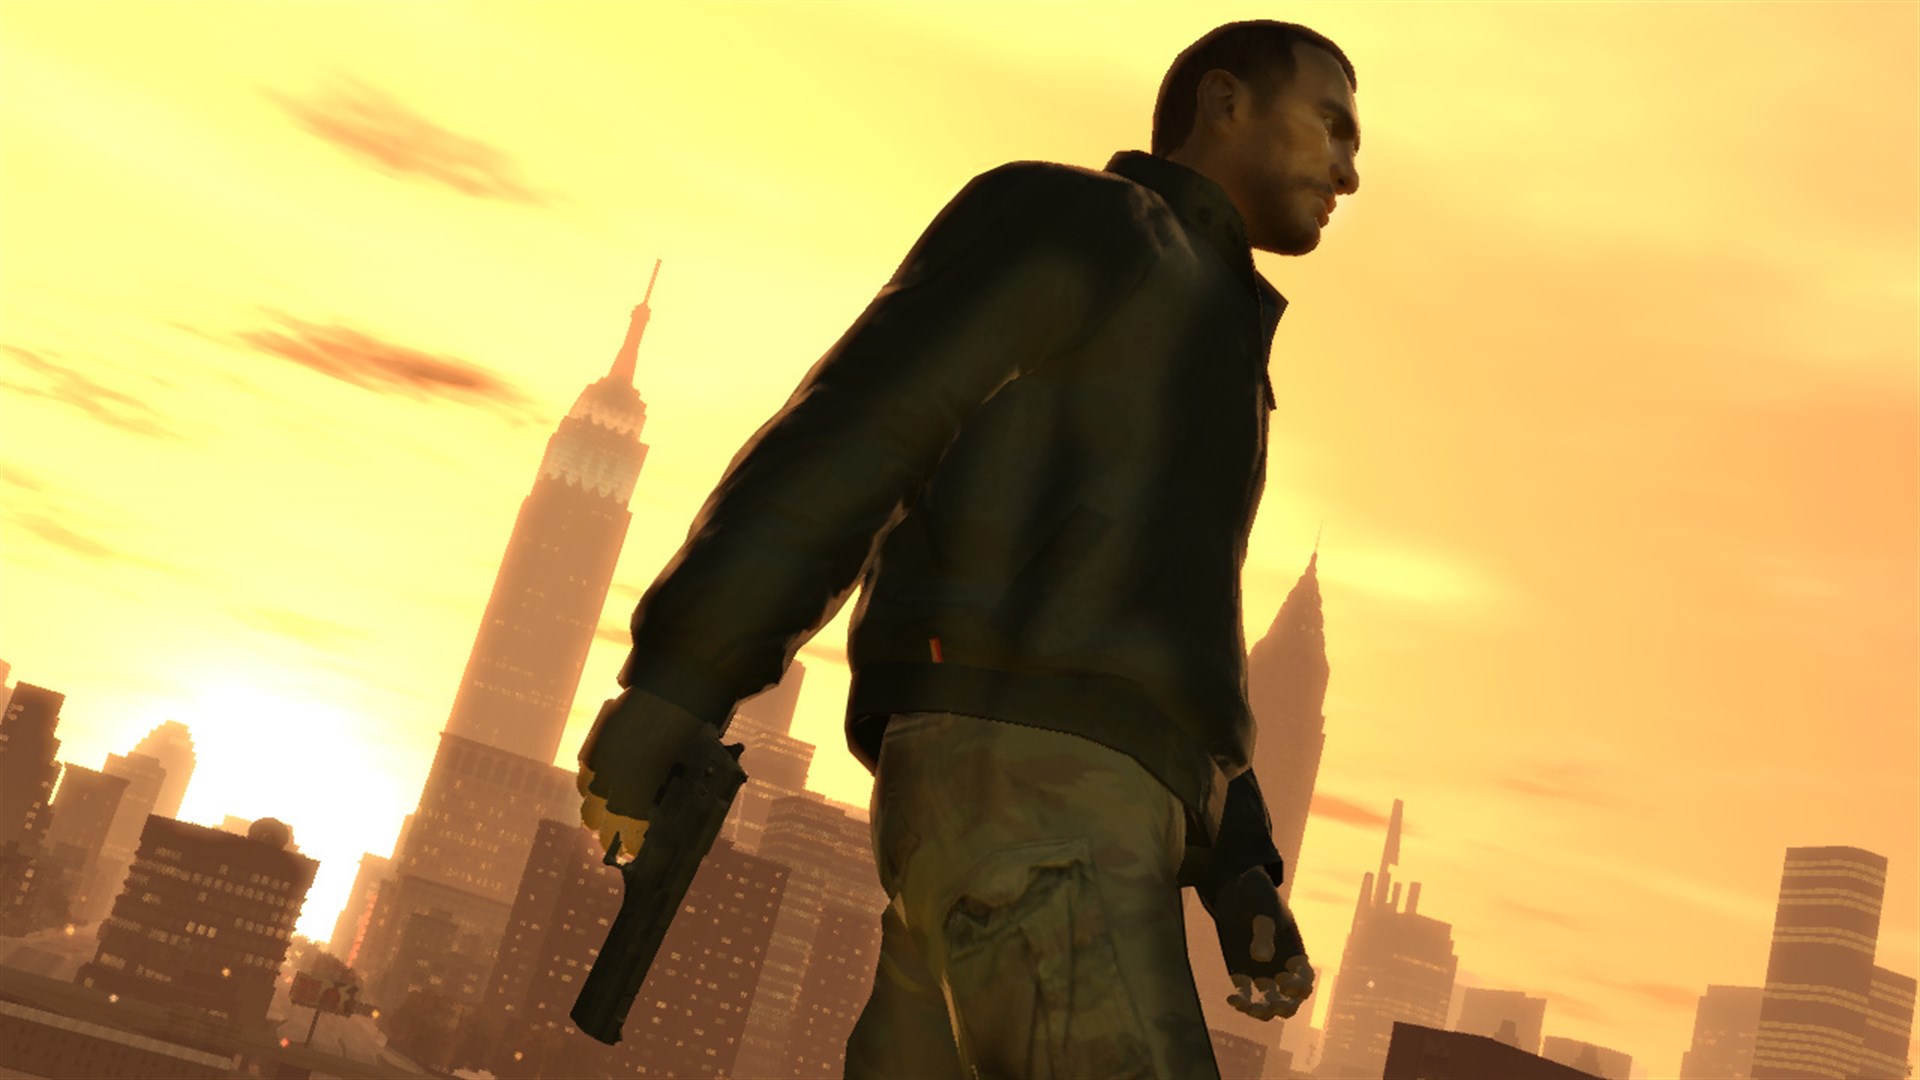 Grand Theft Auto IV Cheat Codes for Xbox 360